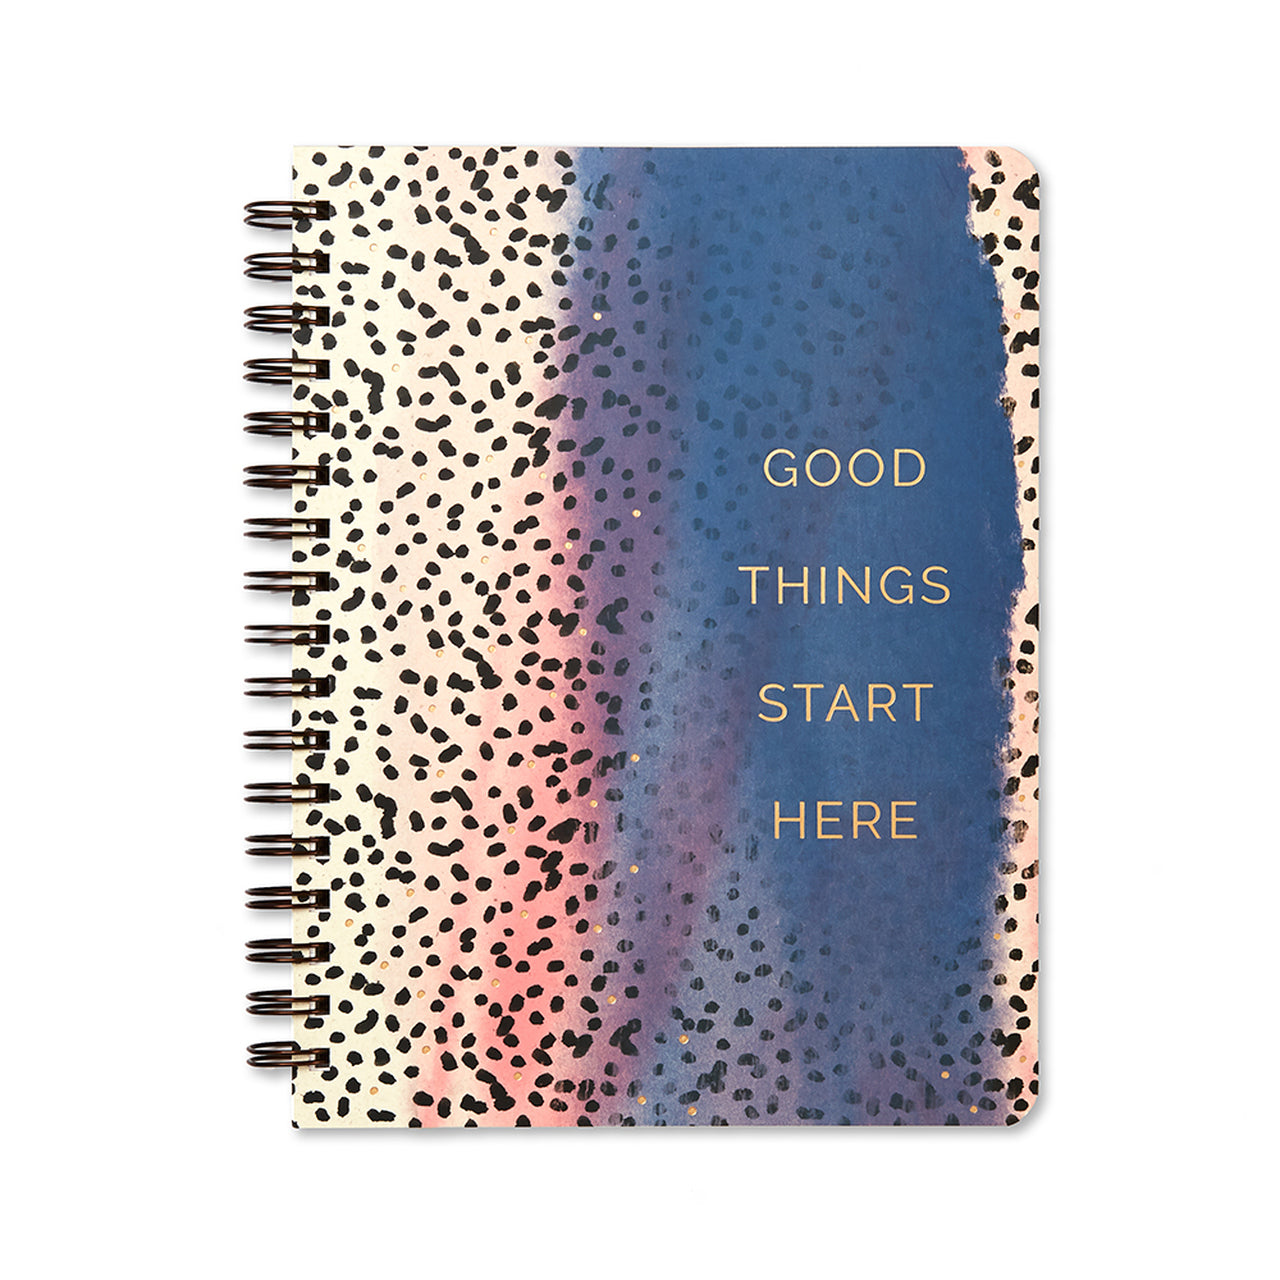 Good Things Start Here Notebook